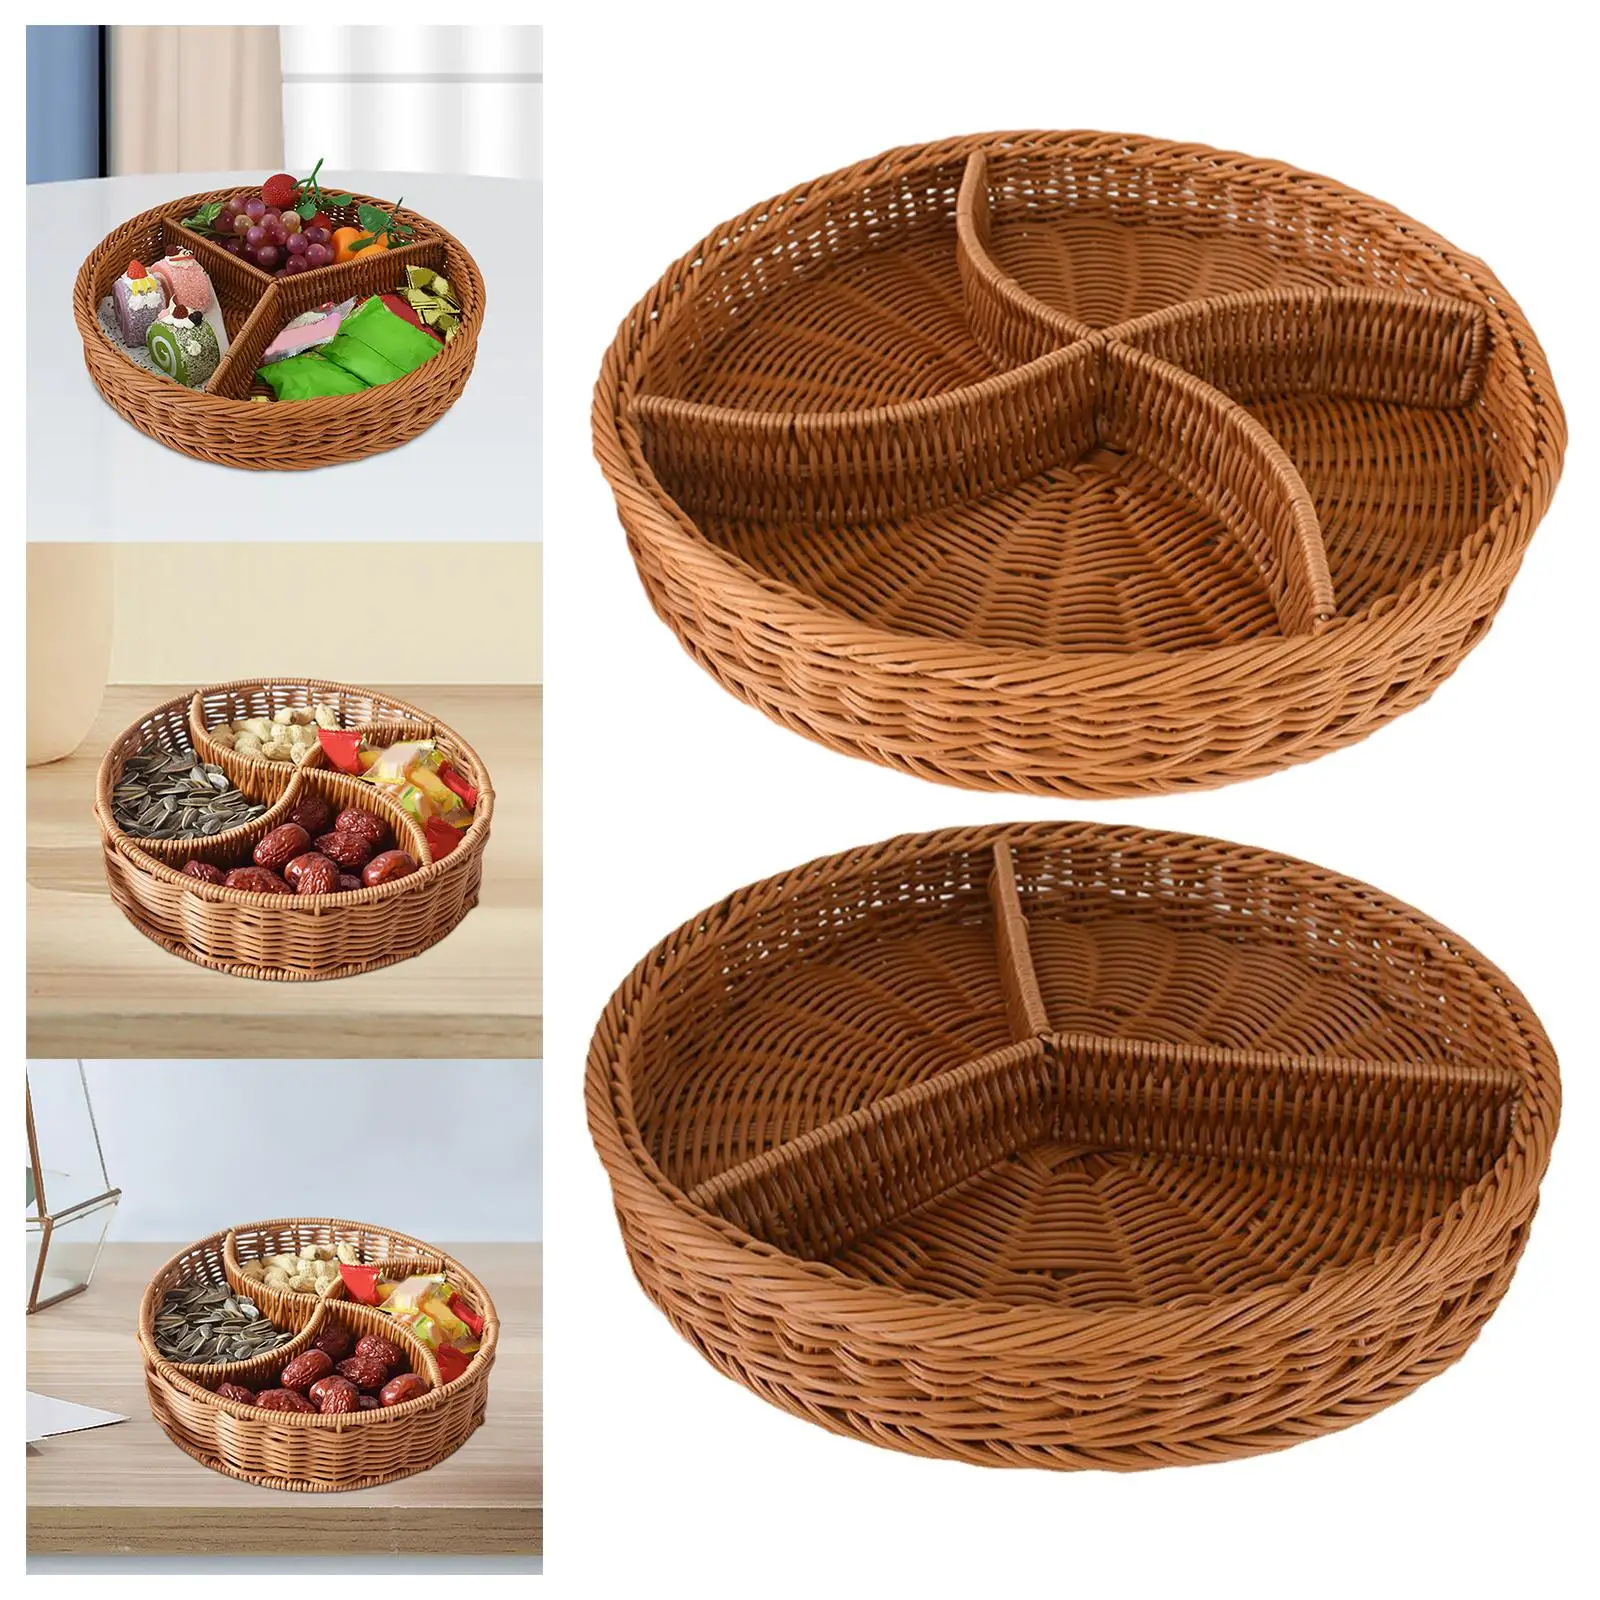 Imitation Rattan Baskets Snack Tray Handmade Wicker Storage Baskets for Kitchen Home Restaurant Dining Coffee Table Snacks